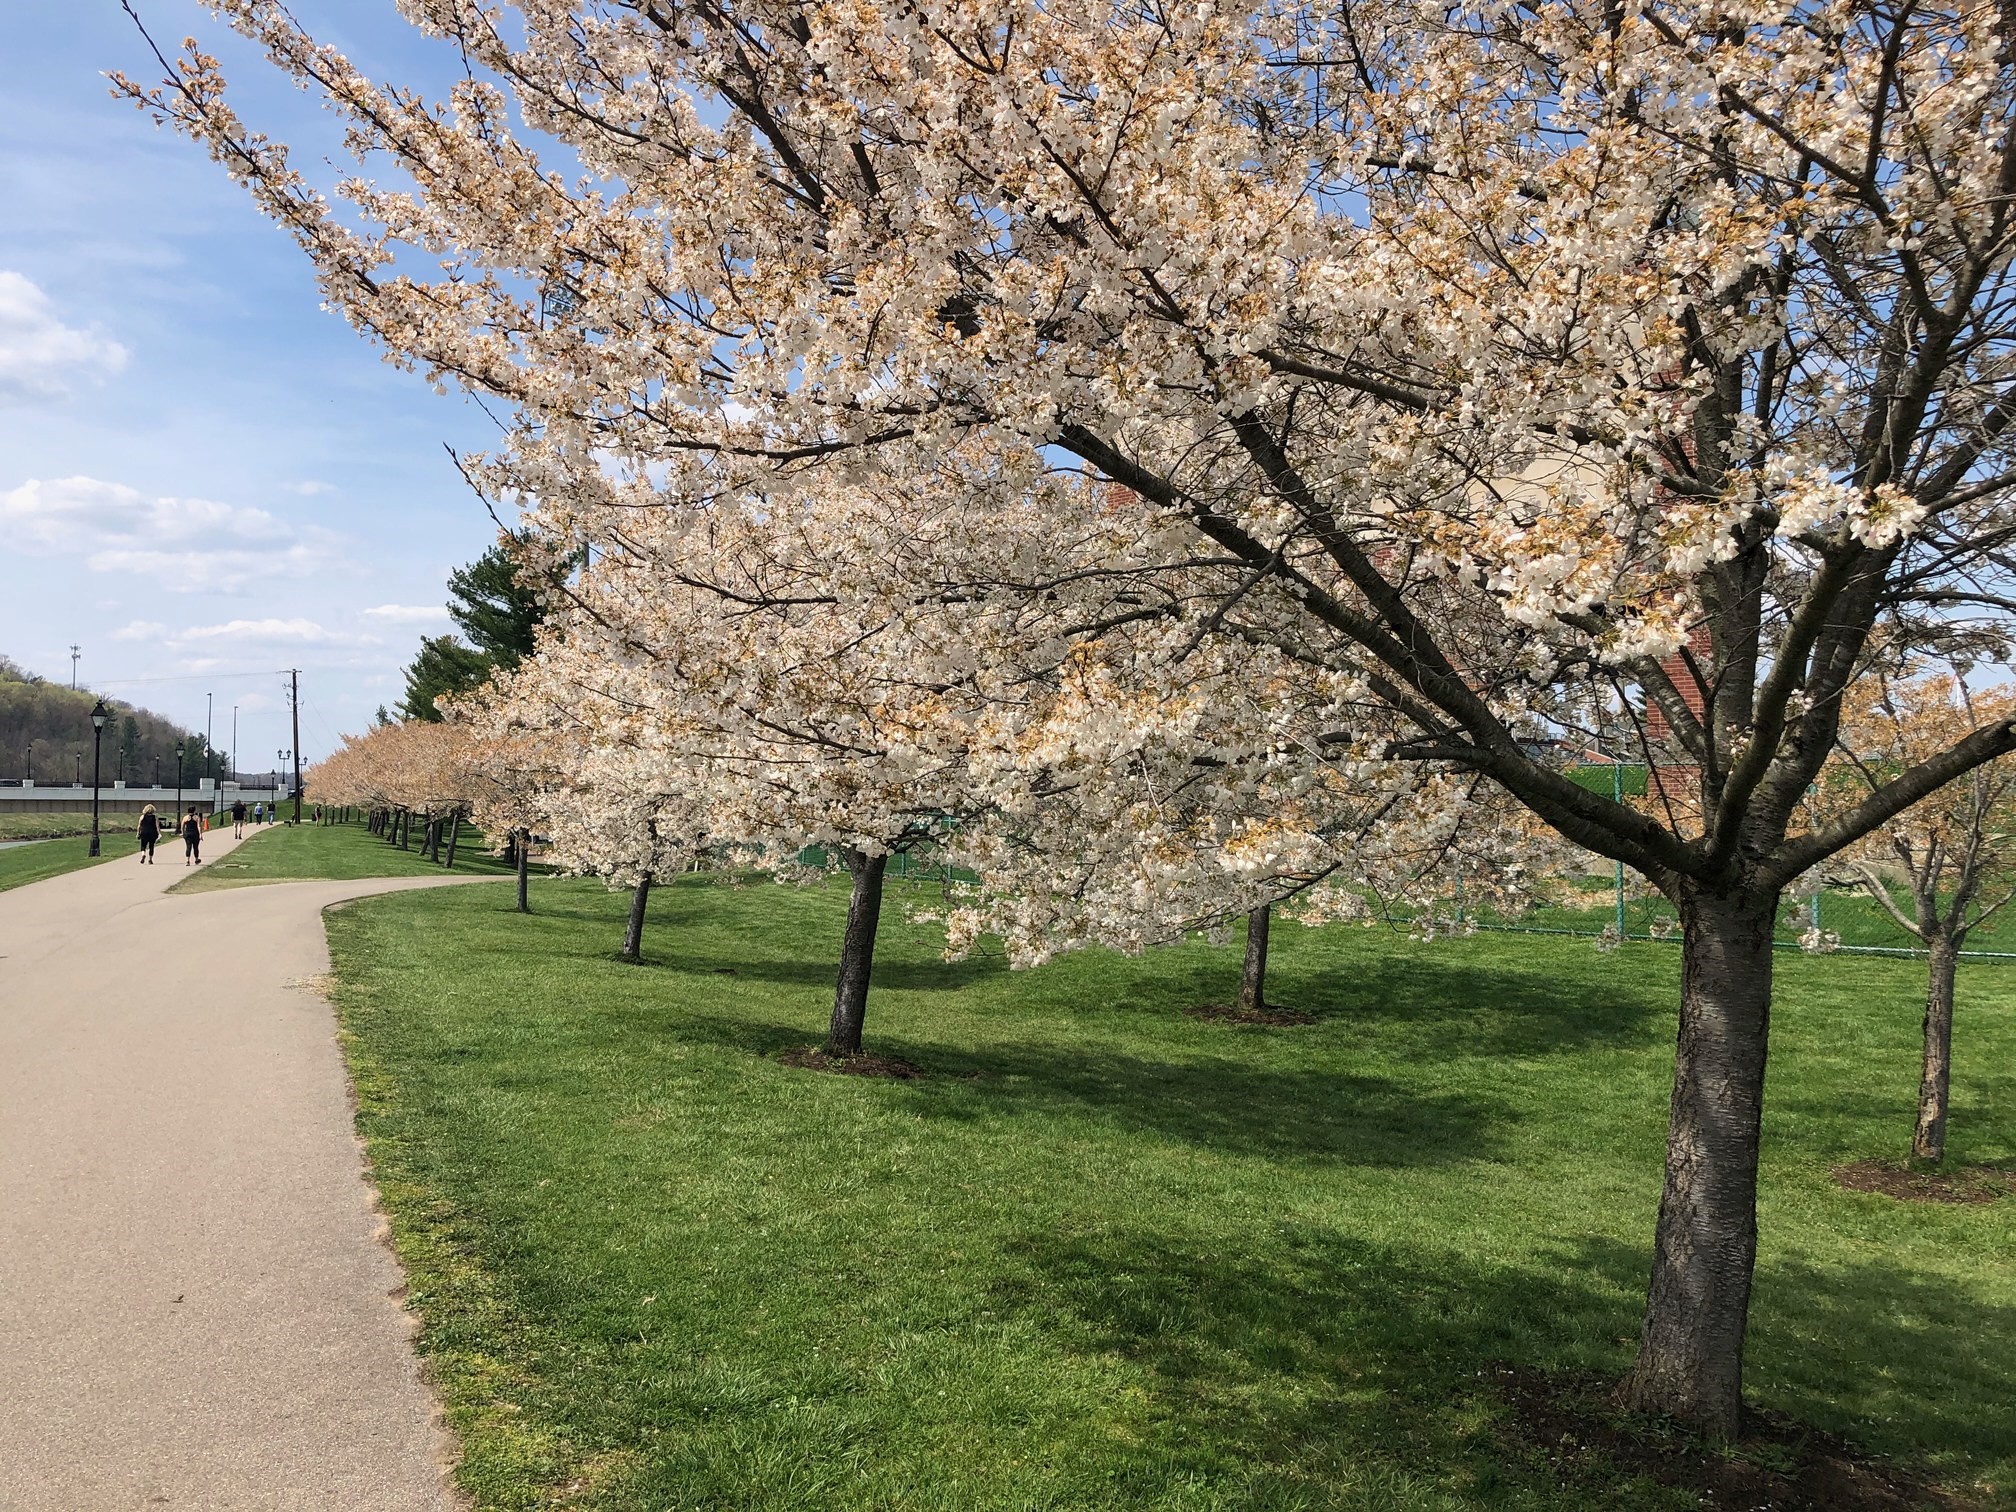 Cherry Blossoms at Ohio University Ohio University